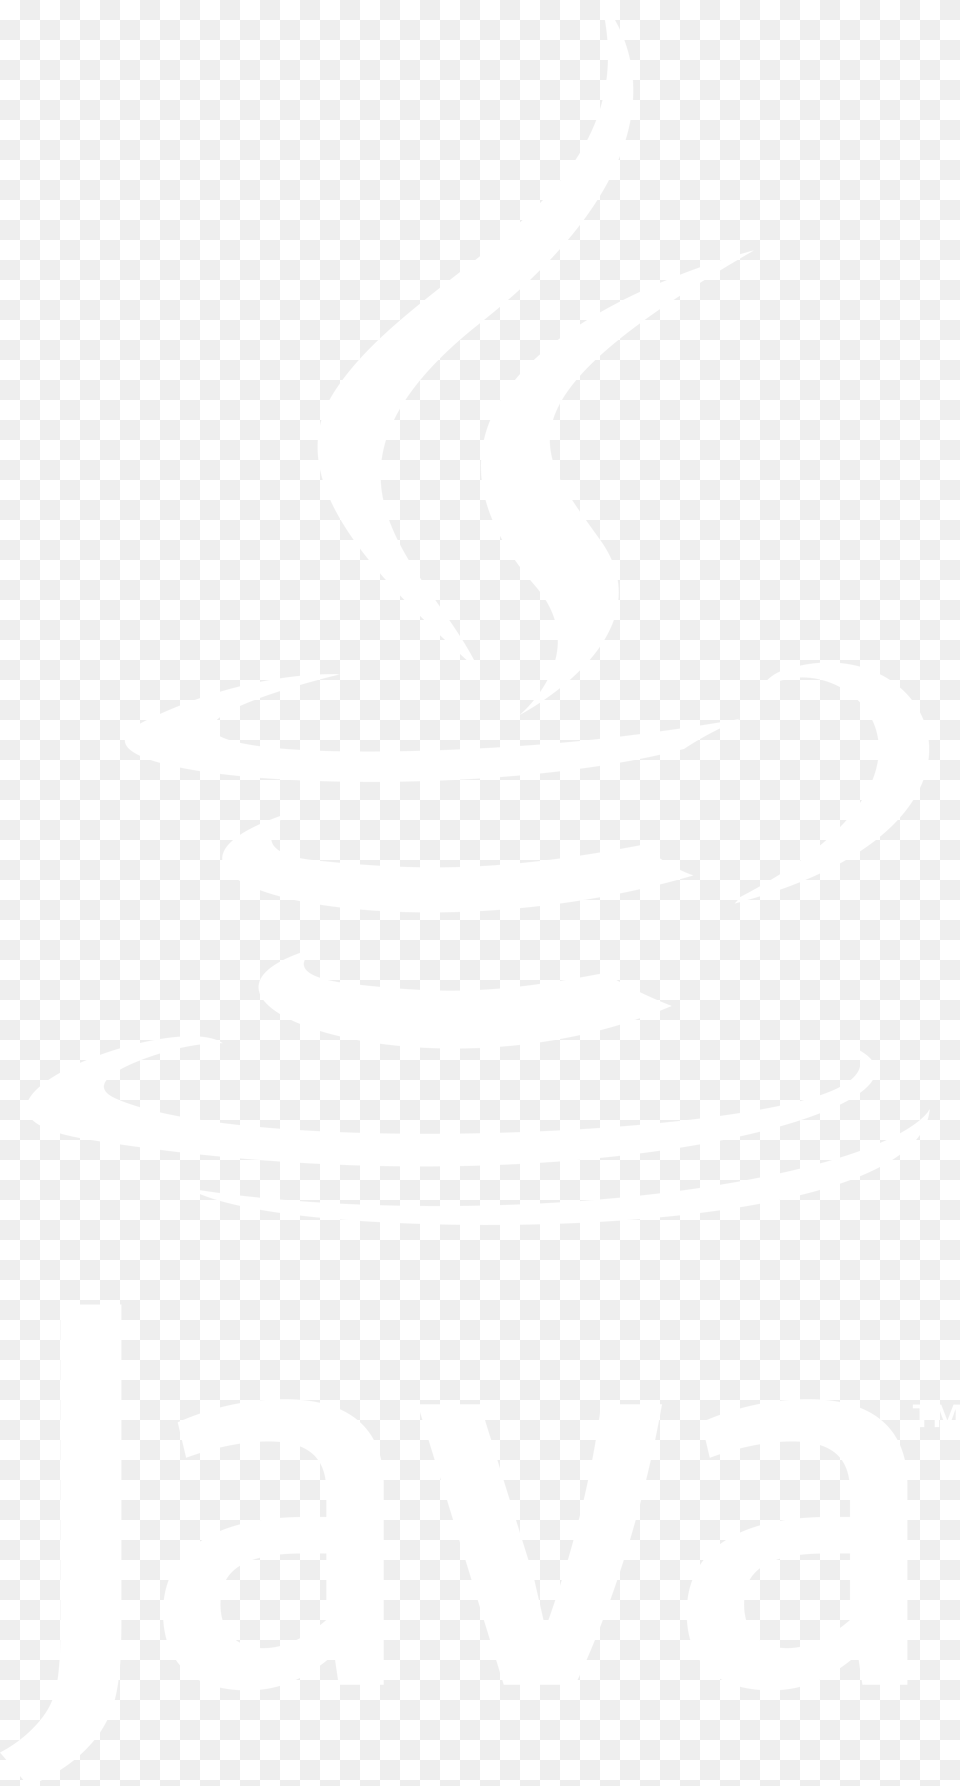 Java Logo Black And White Philip Morris International Logo White, Stencil, Animal, Fish, Sea Life Free Png Download